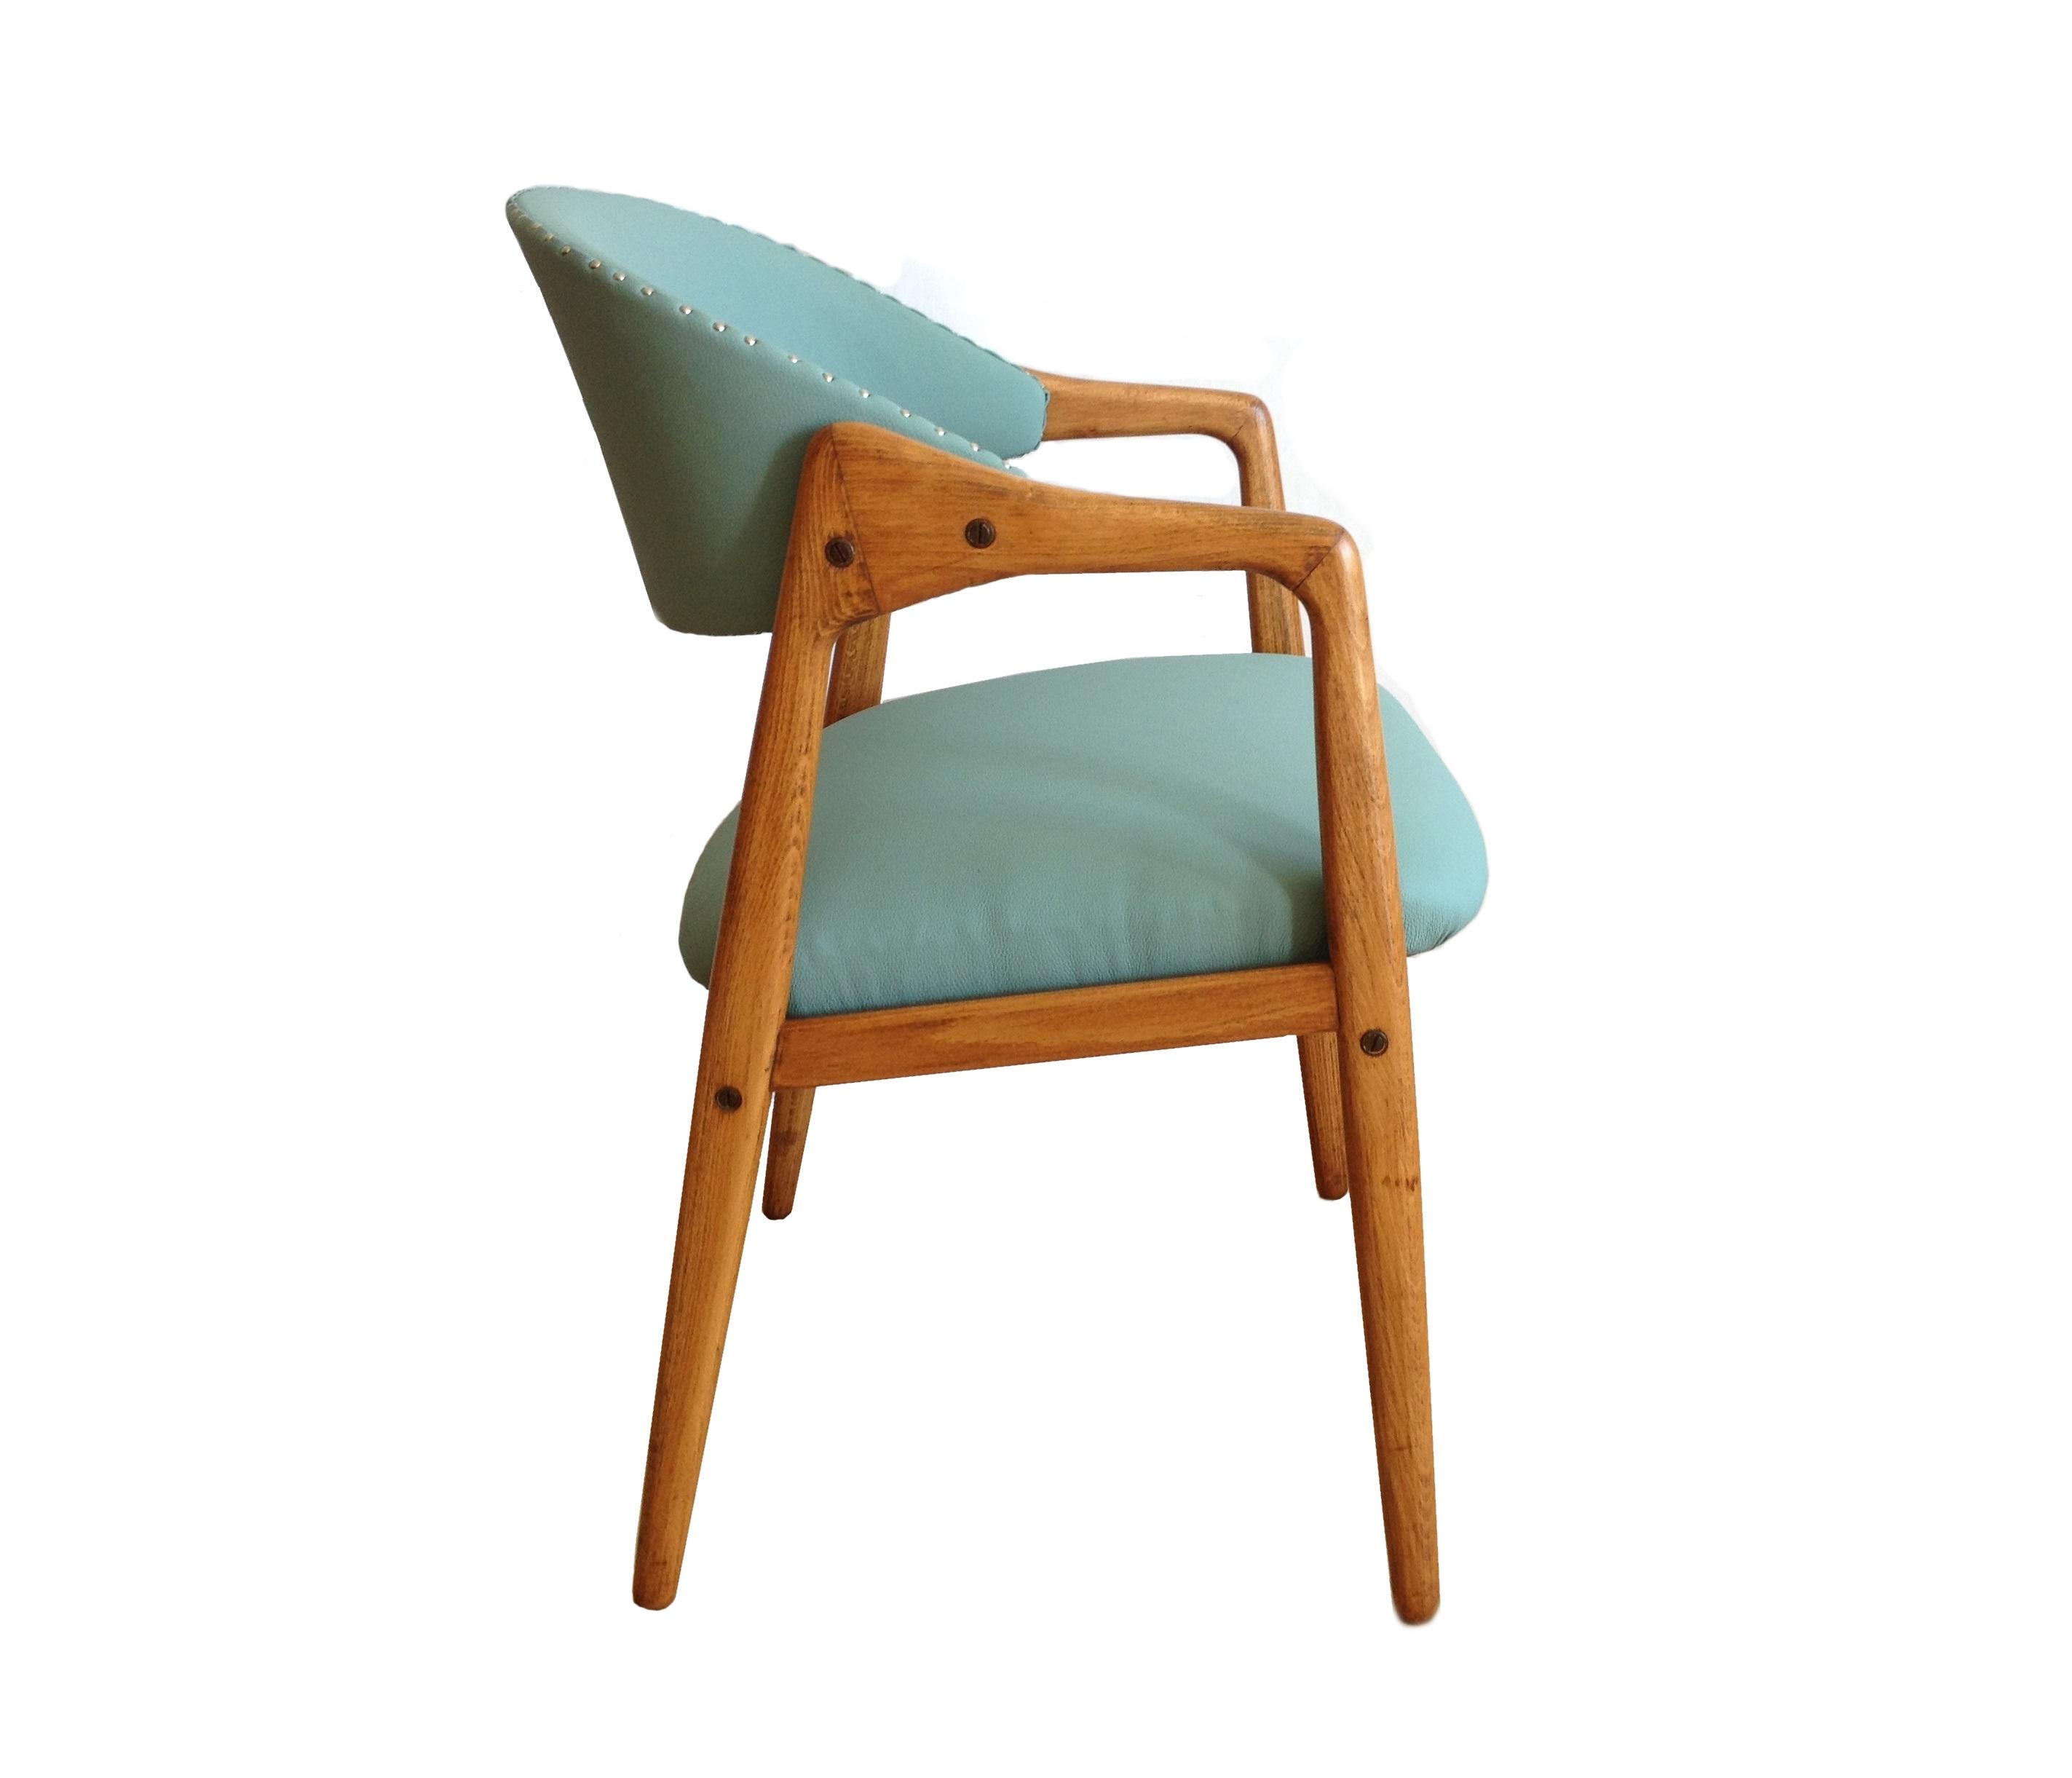 Stuhl, Sessel, Mid century, 60er Jahre #stuhl #retro #vintage #sessel ©buashko